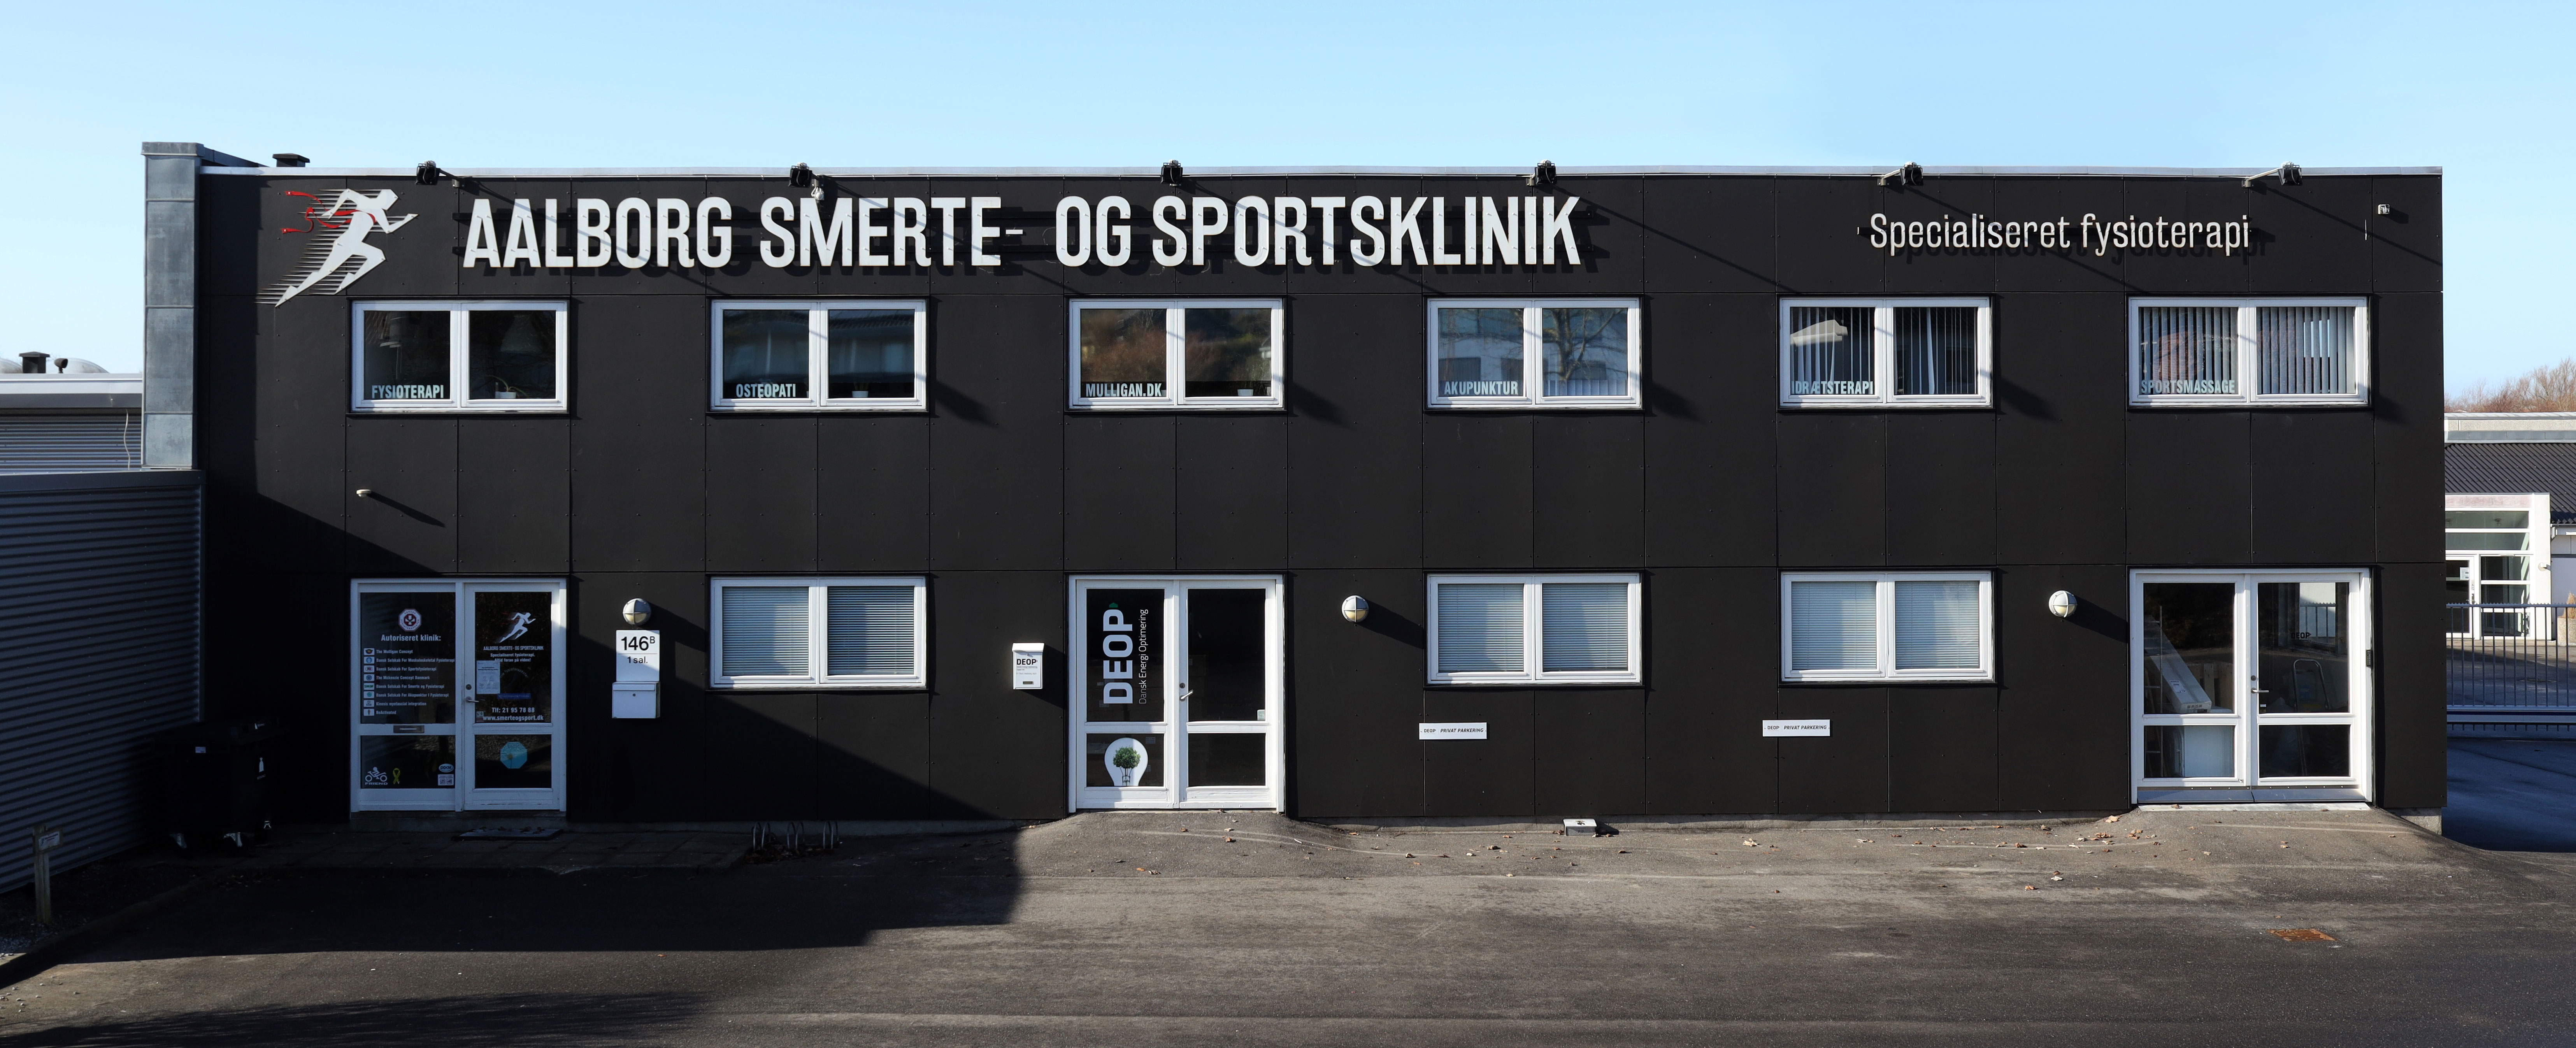 Aalborg Smerte- og Sportsklinik